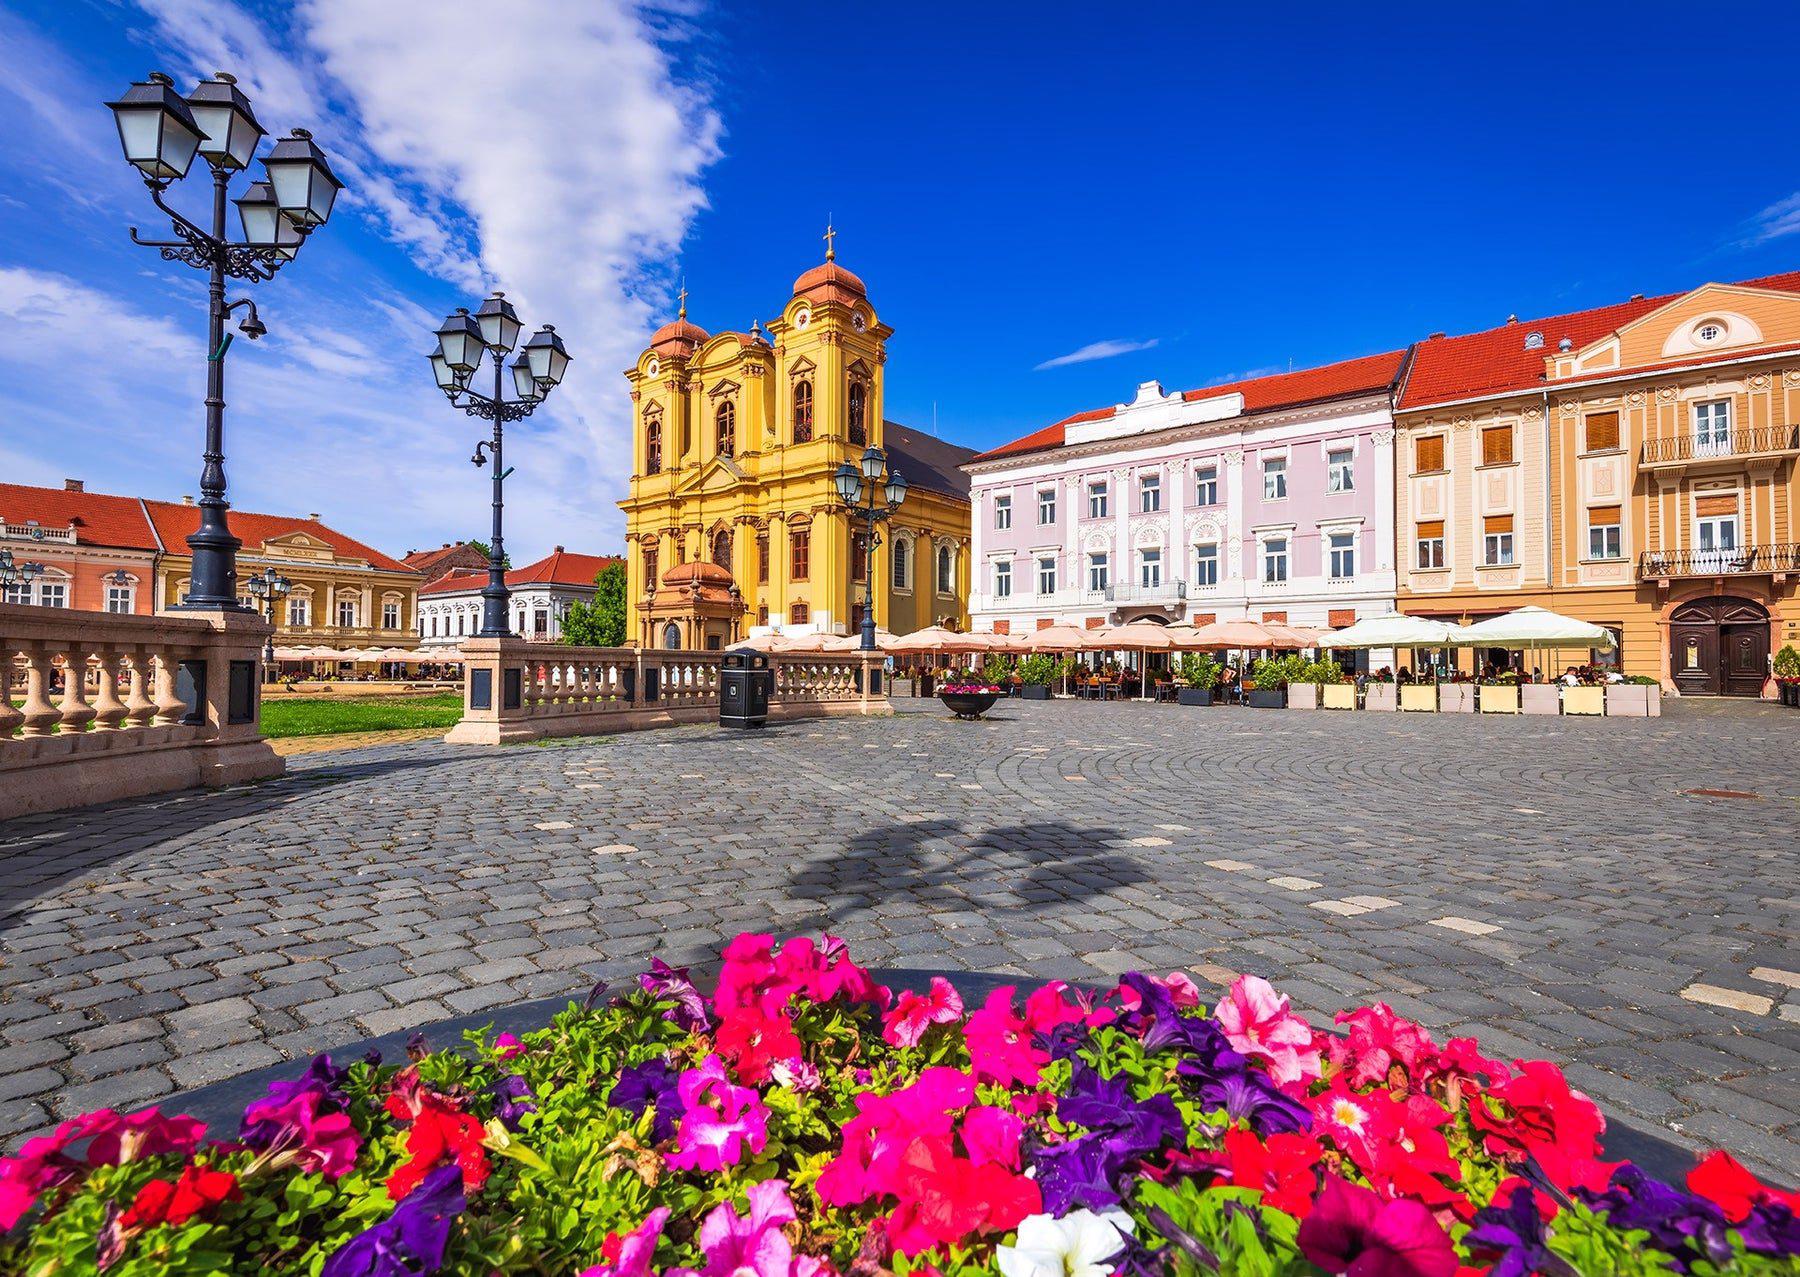 The Union Square, Timisoara, Romania